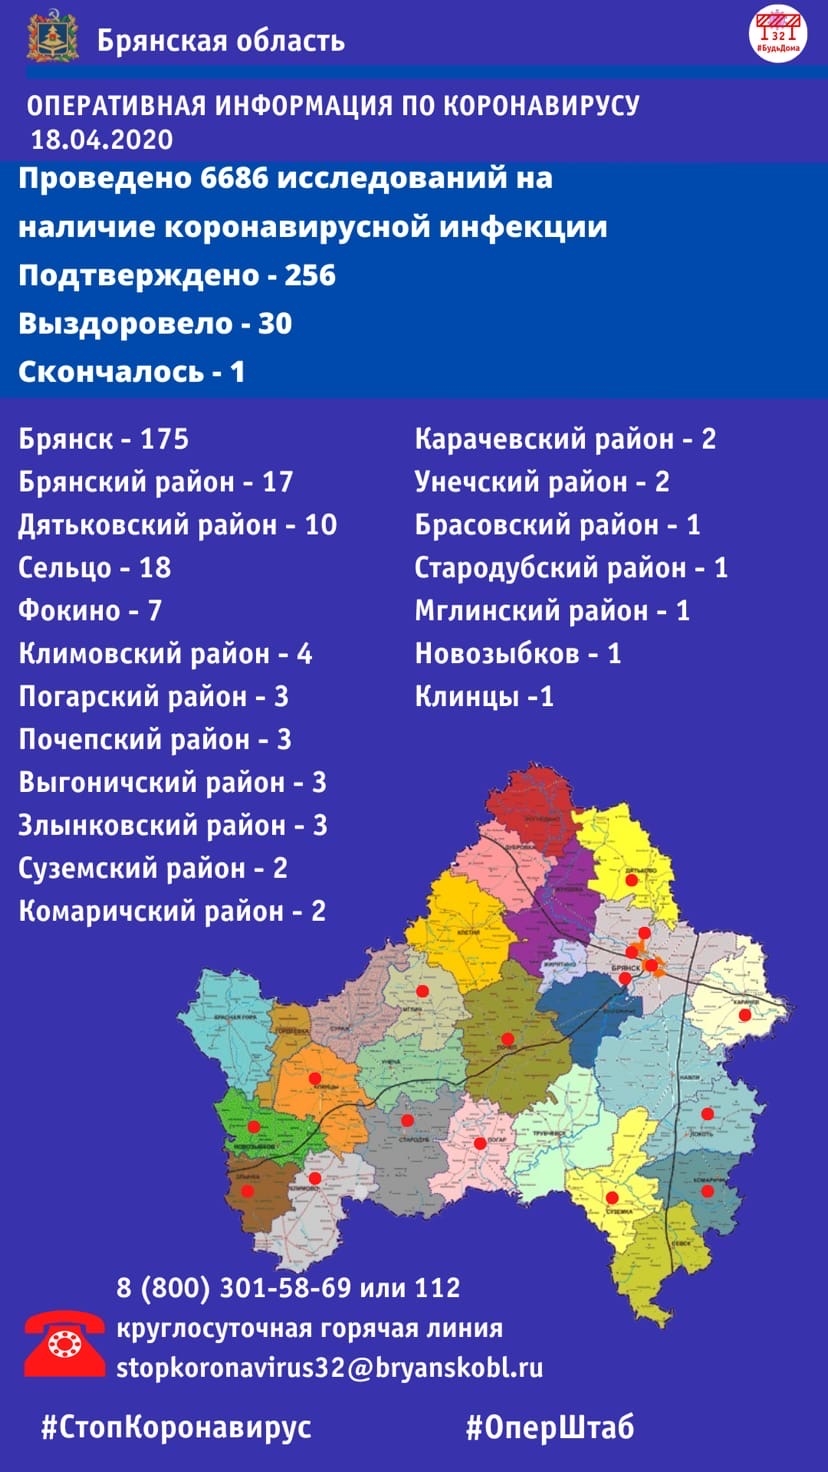 Плюс три района: число пациентов с Covid-19 в Брянской области достигло 256